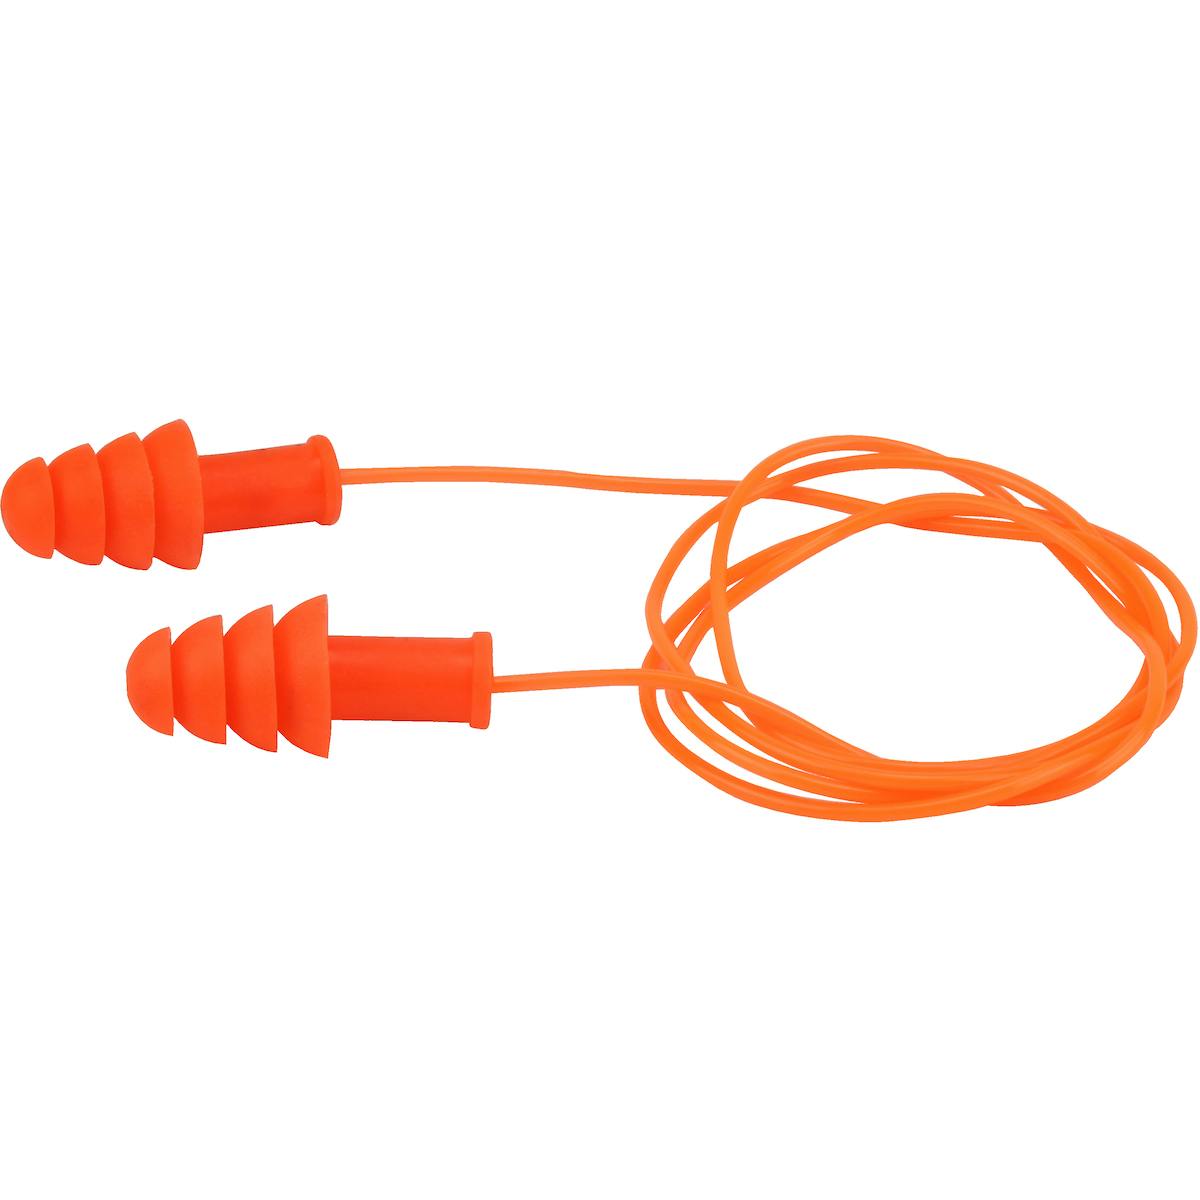 Reusable TPR Corded Ear Plugs - NRR 27, Orange (267-HPR400C) - OS_0